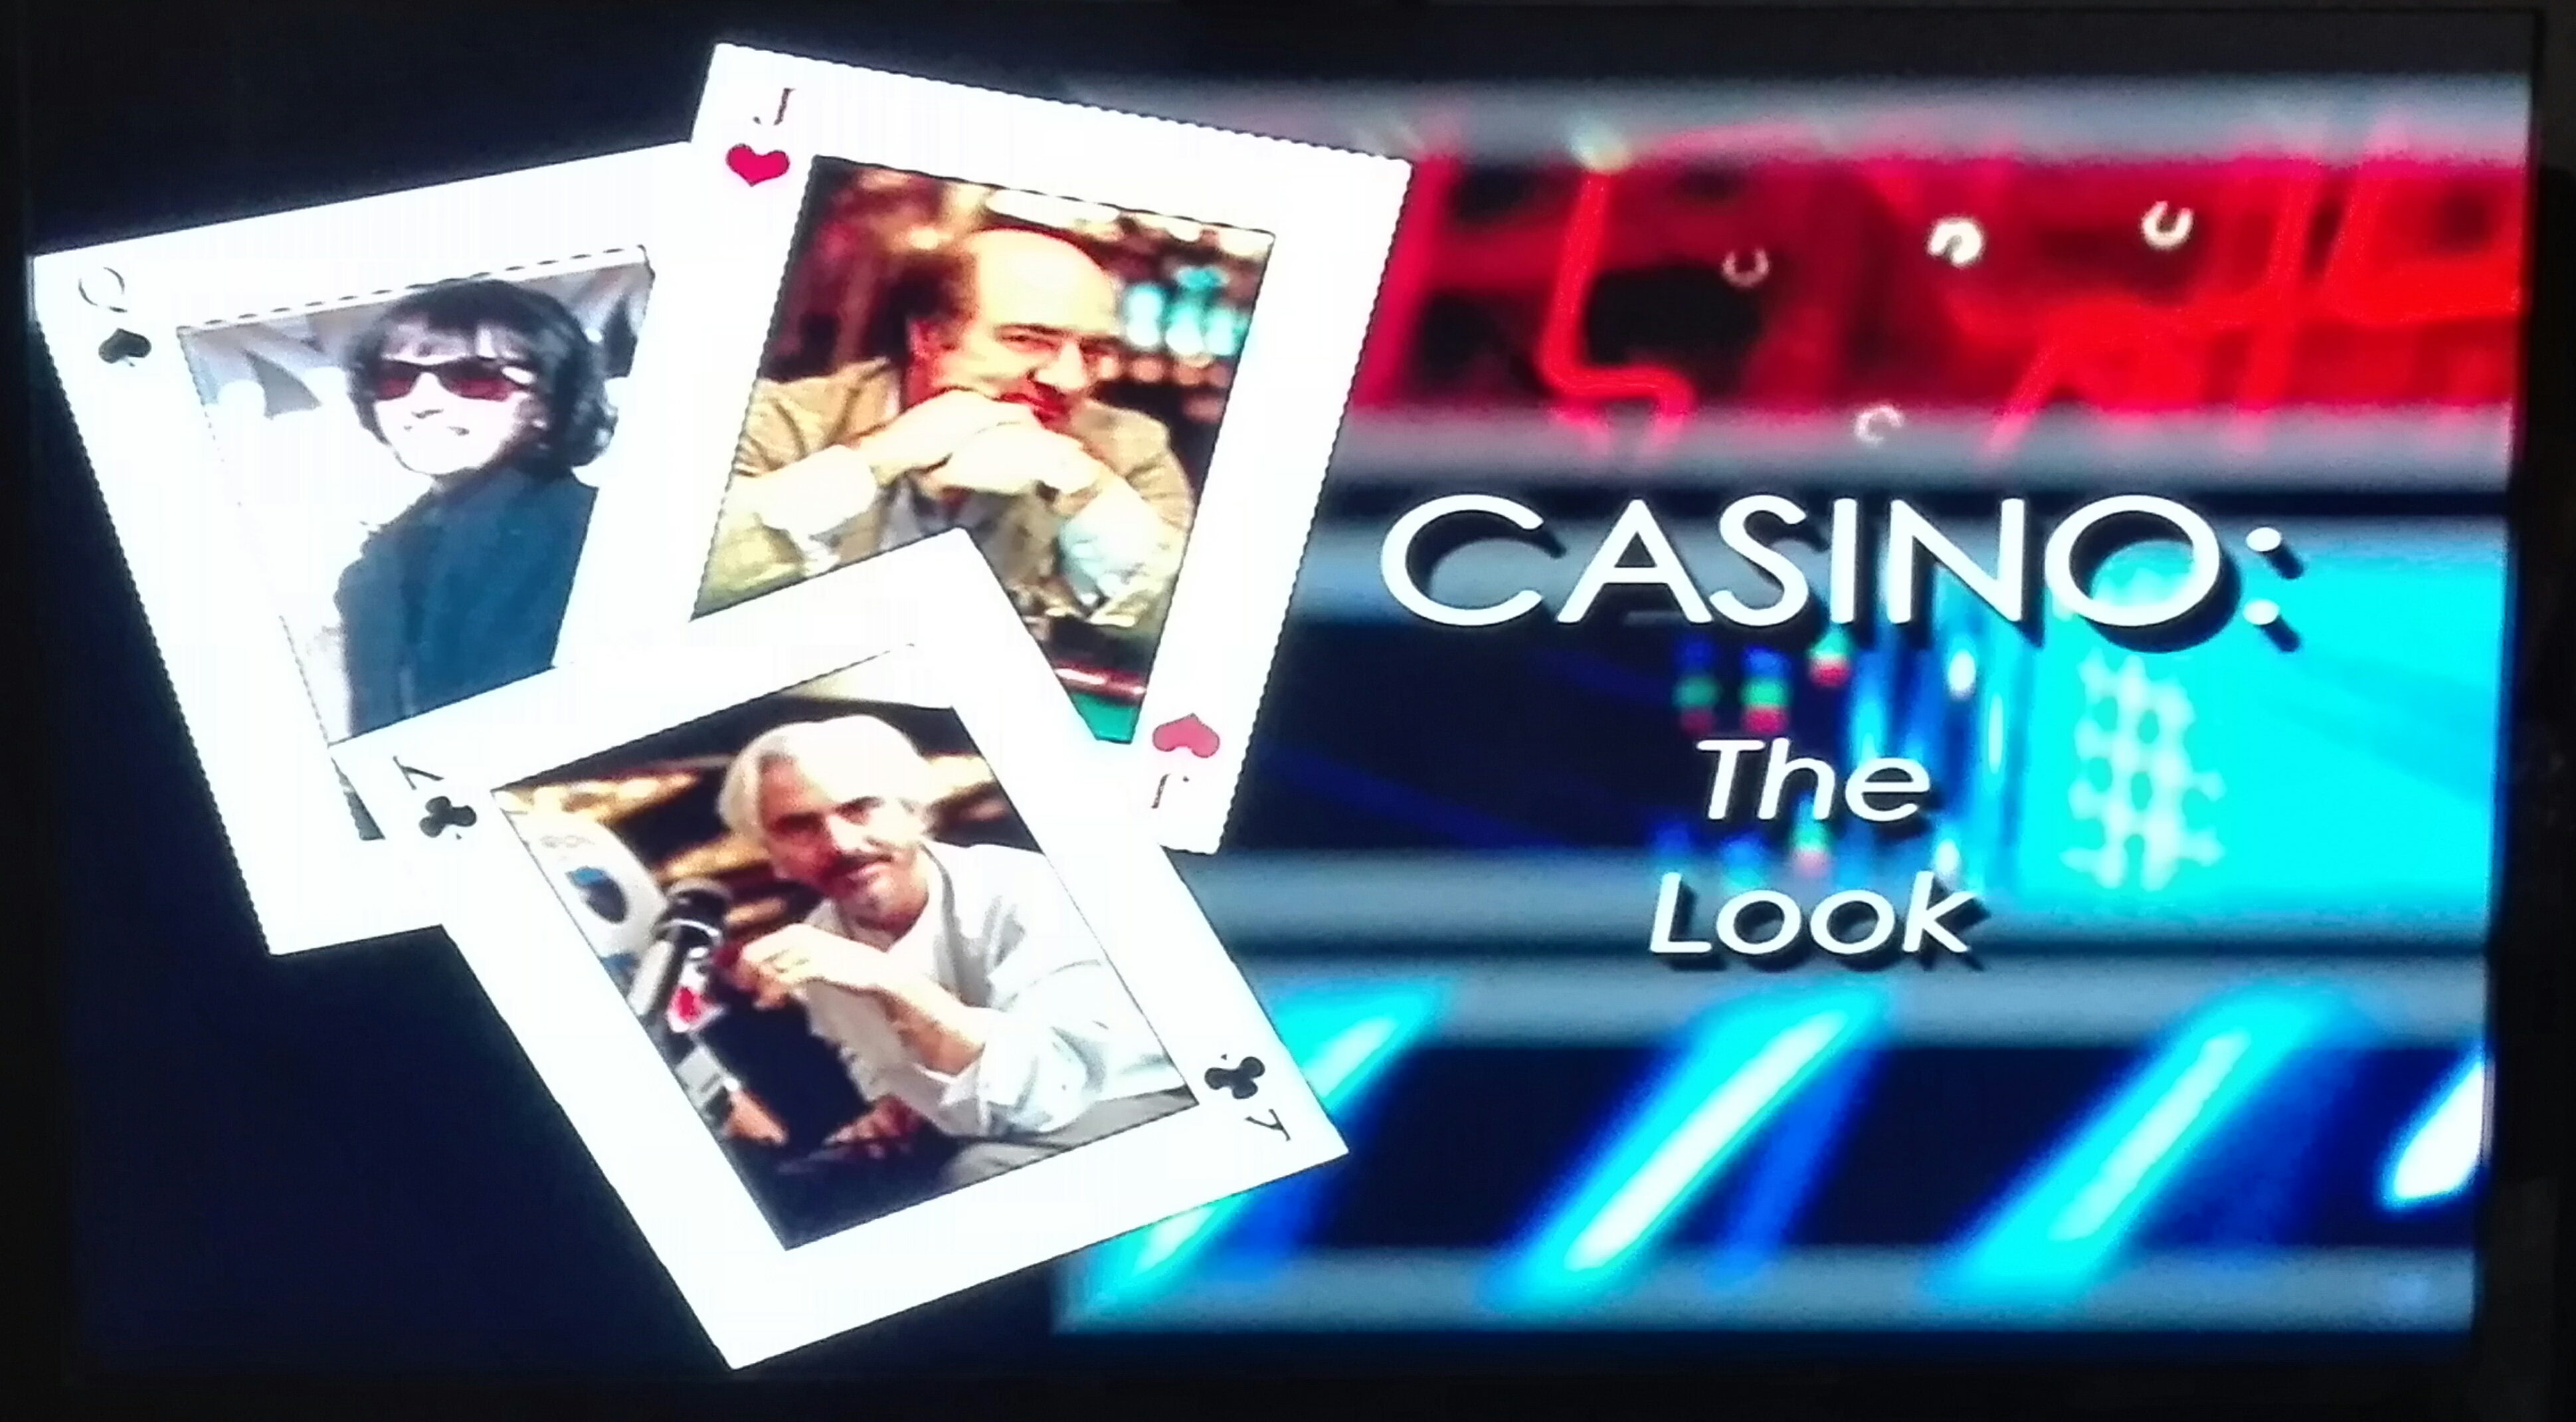 Casino: The Look